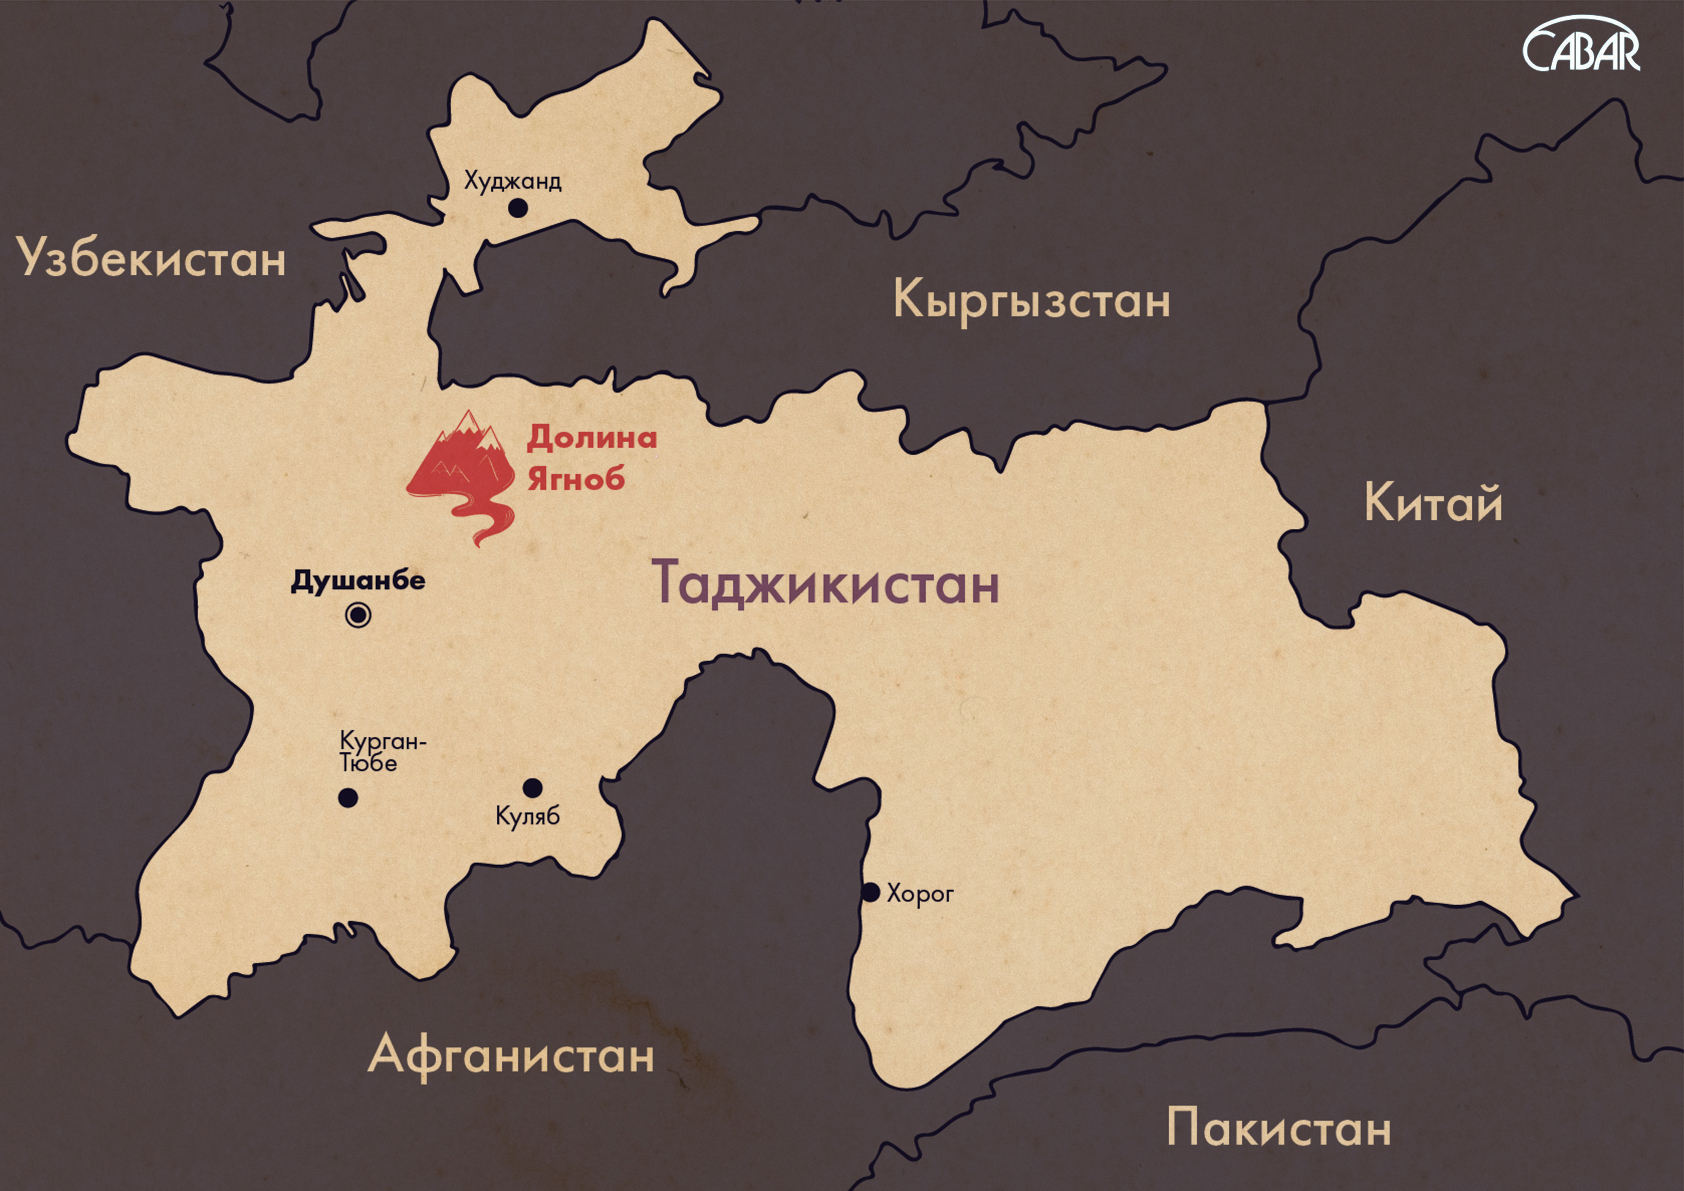 Где находится таджикский. Таджикистан карта географическая. Таджикистан с кем граничит на карте. Таджикистан на карте с границами. Политическая карта Таджикистана политическая карта Таджикистана.